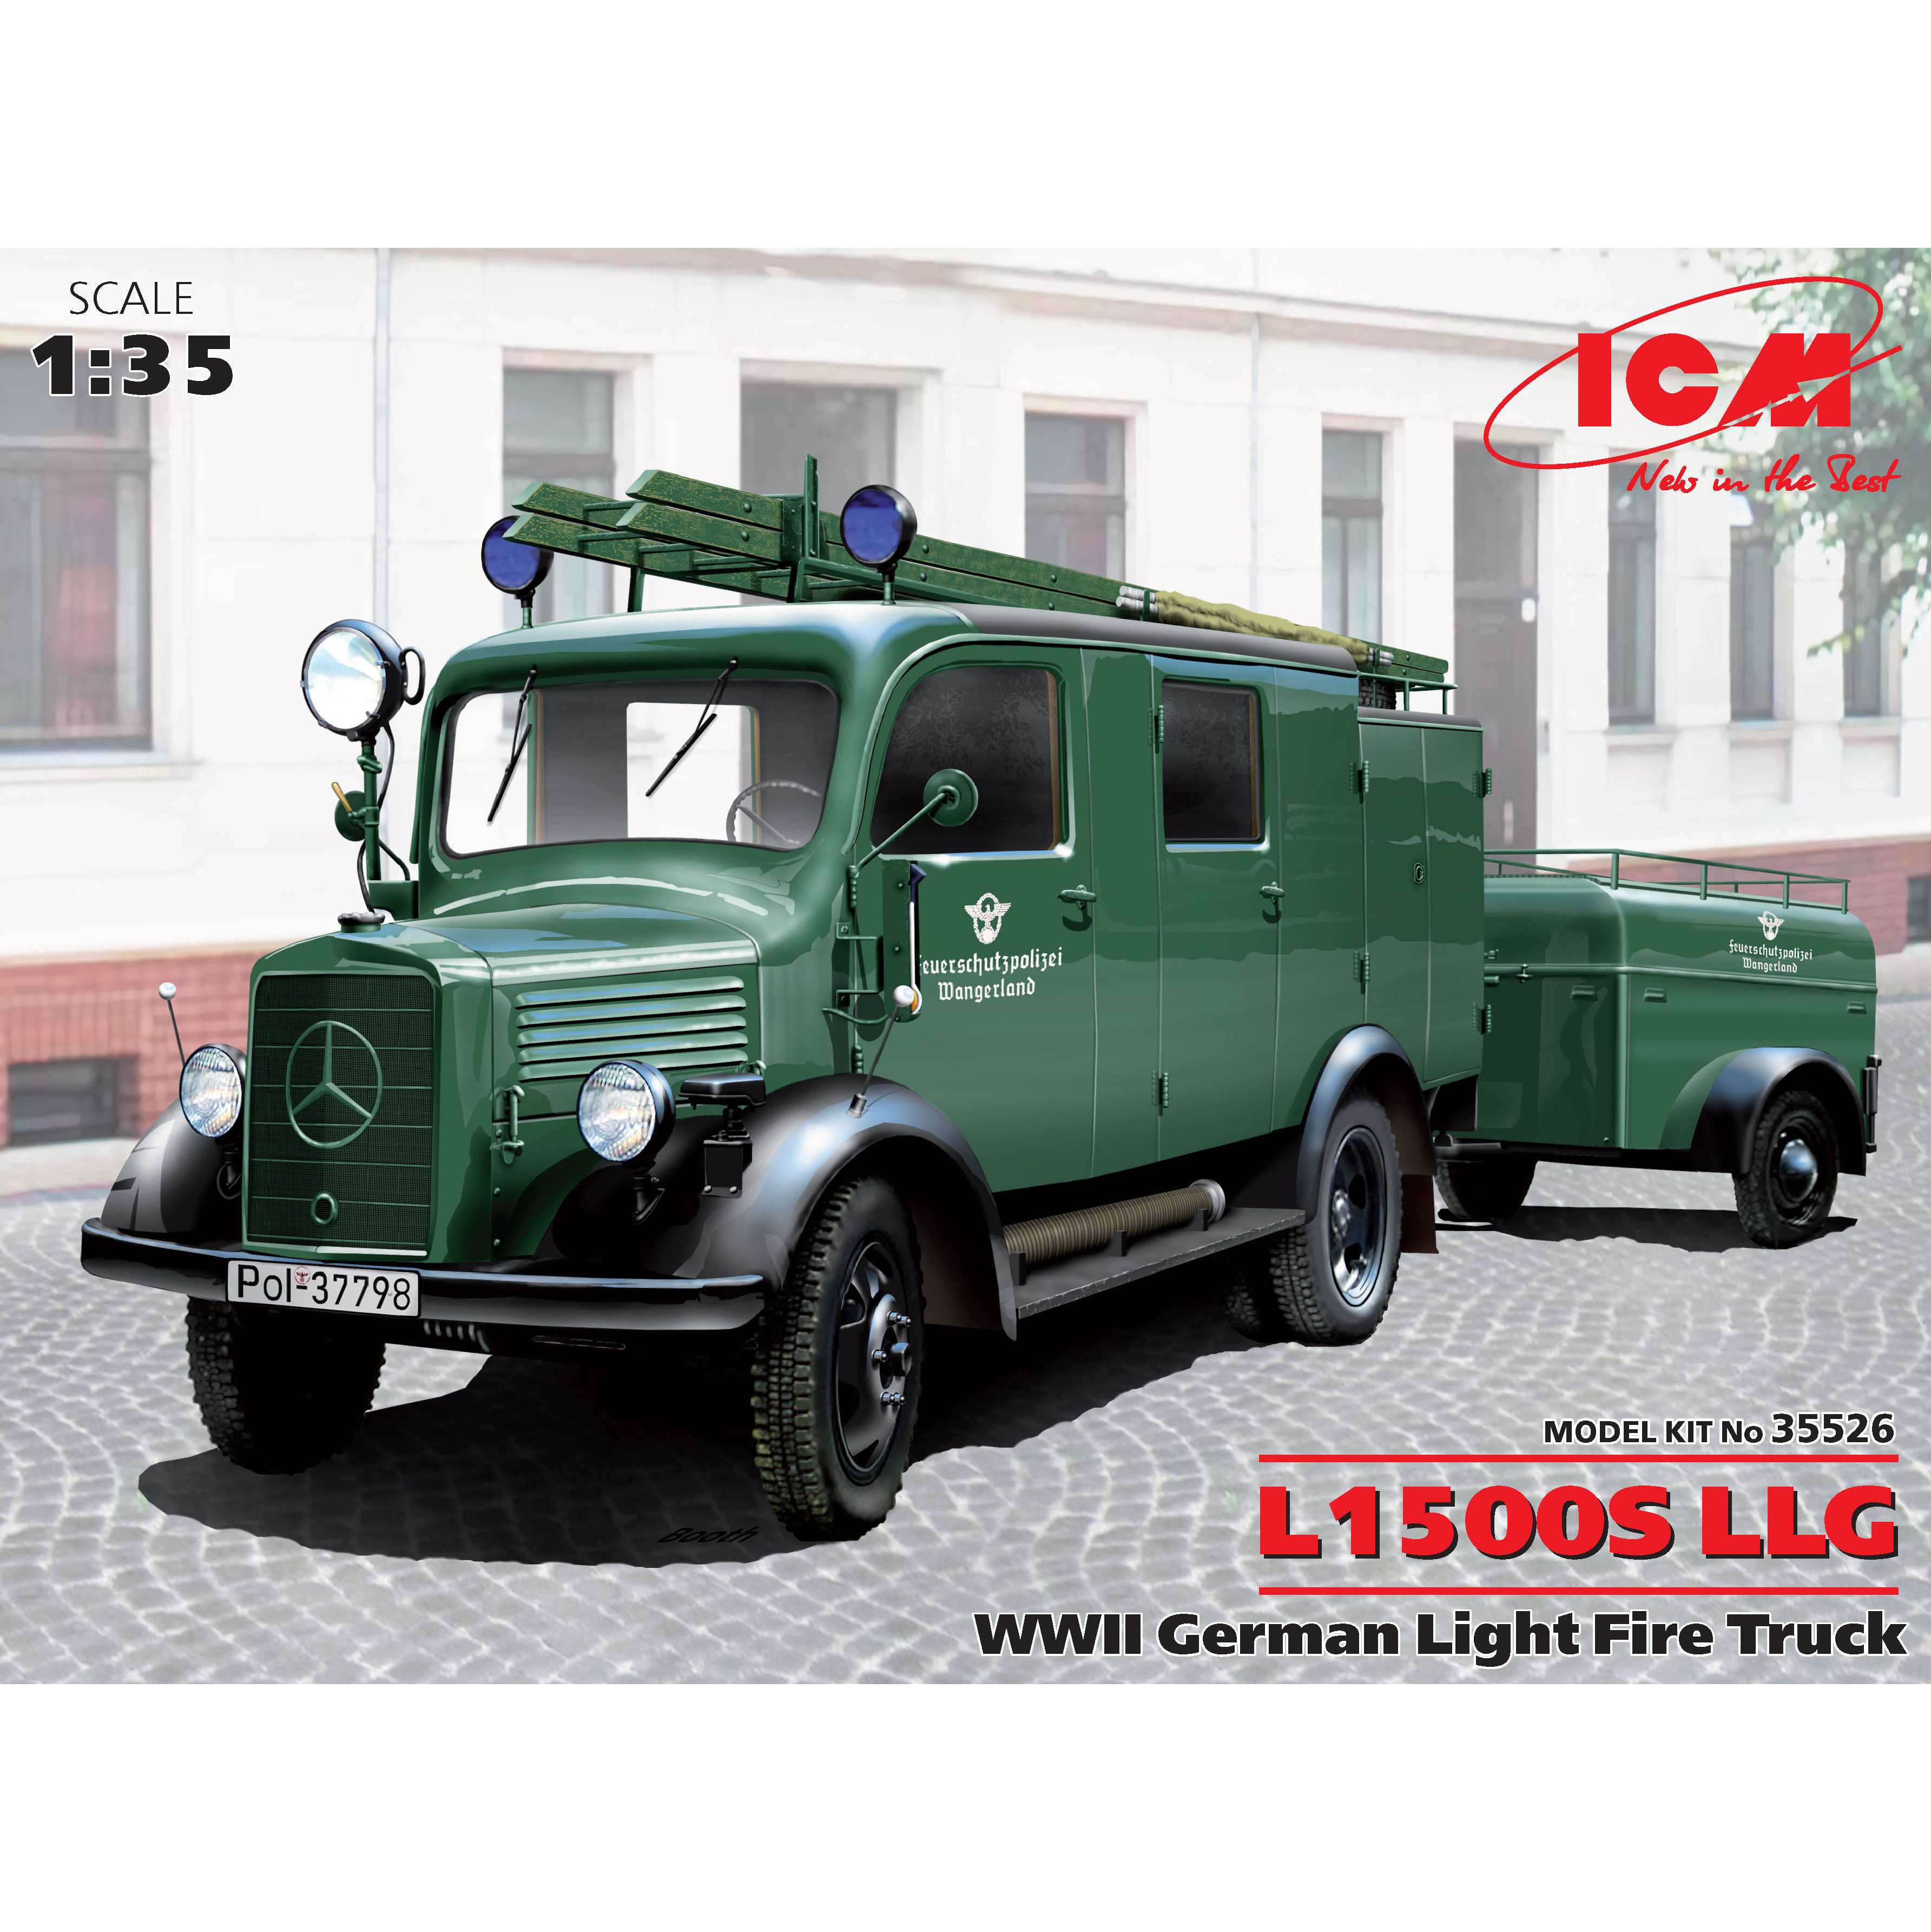 35526 ICM 1/35 L1500S LLG German light fire truck II MV